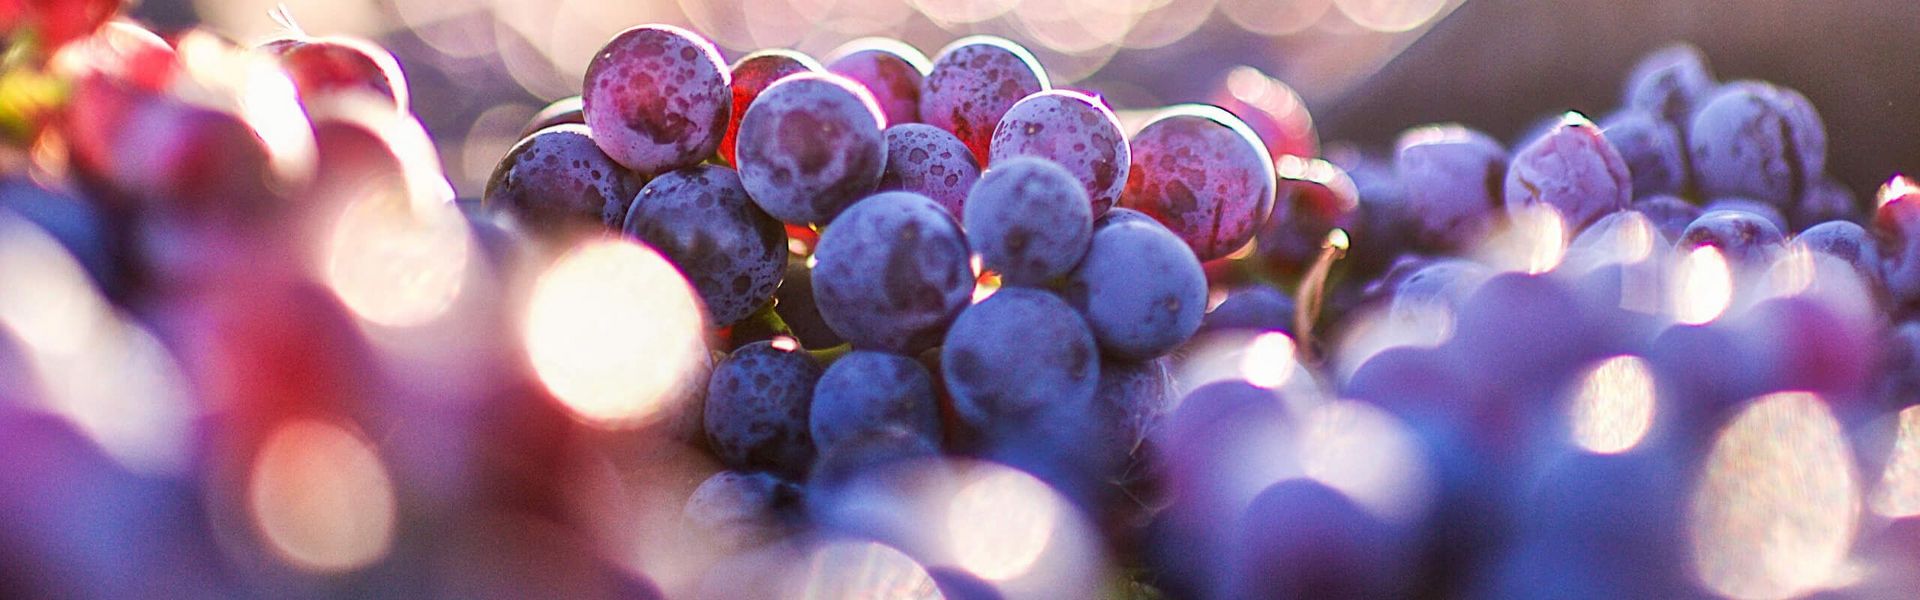 vine grapes in sunlight